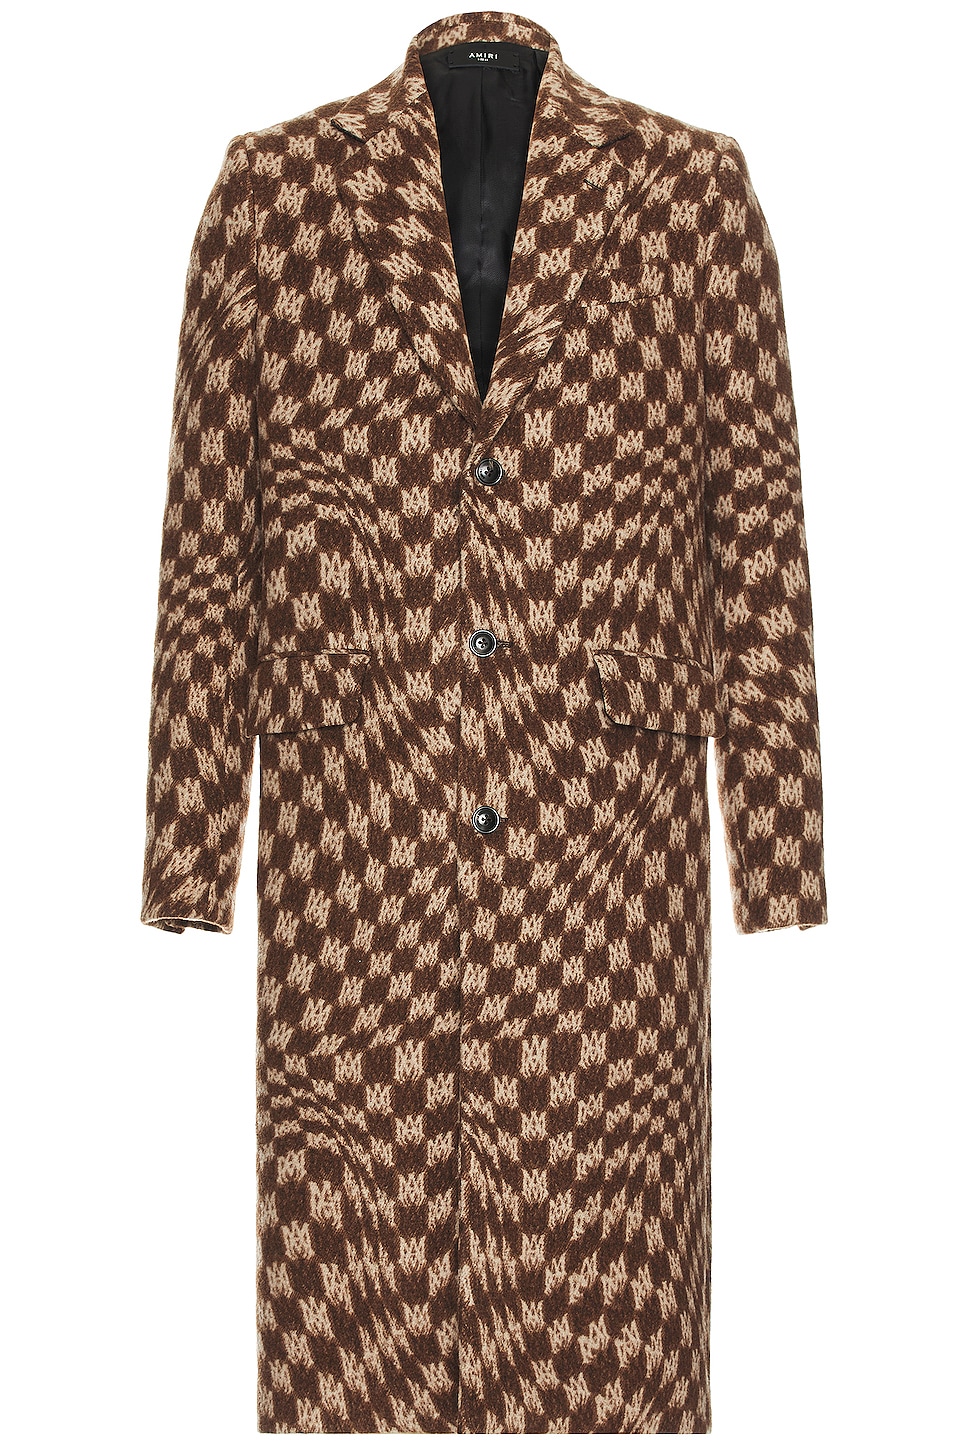 Amiri Jacquard Wavy Overcoat in Brown | FWRD